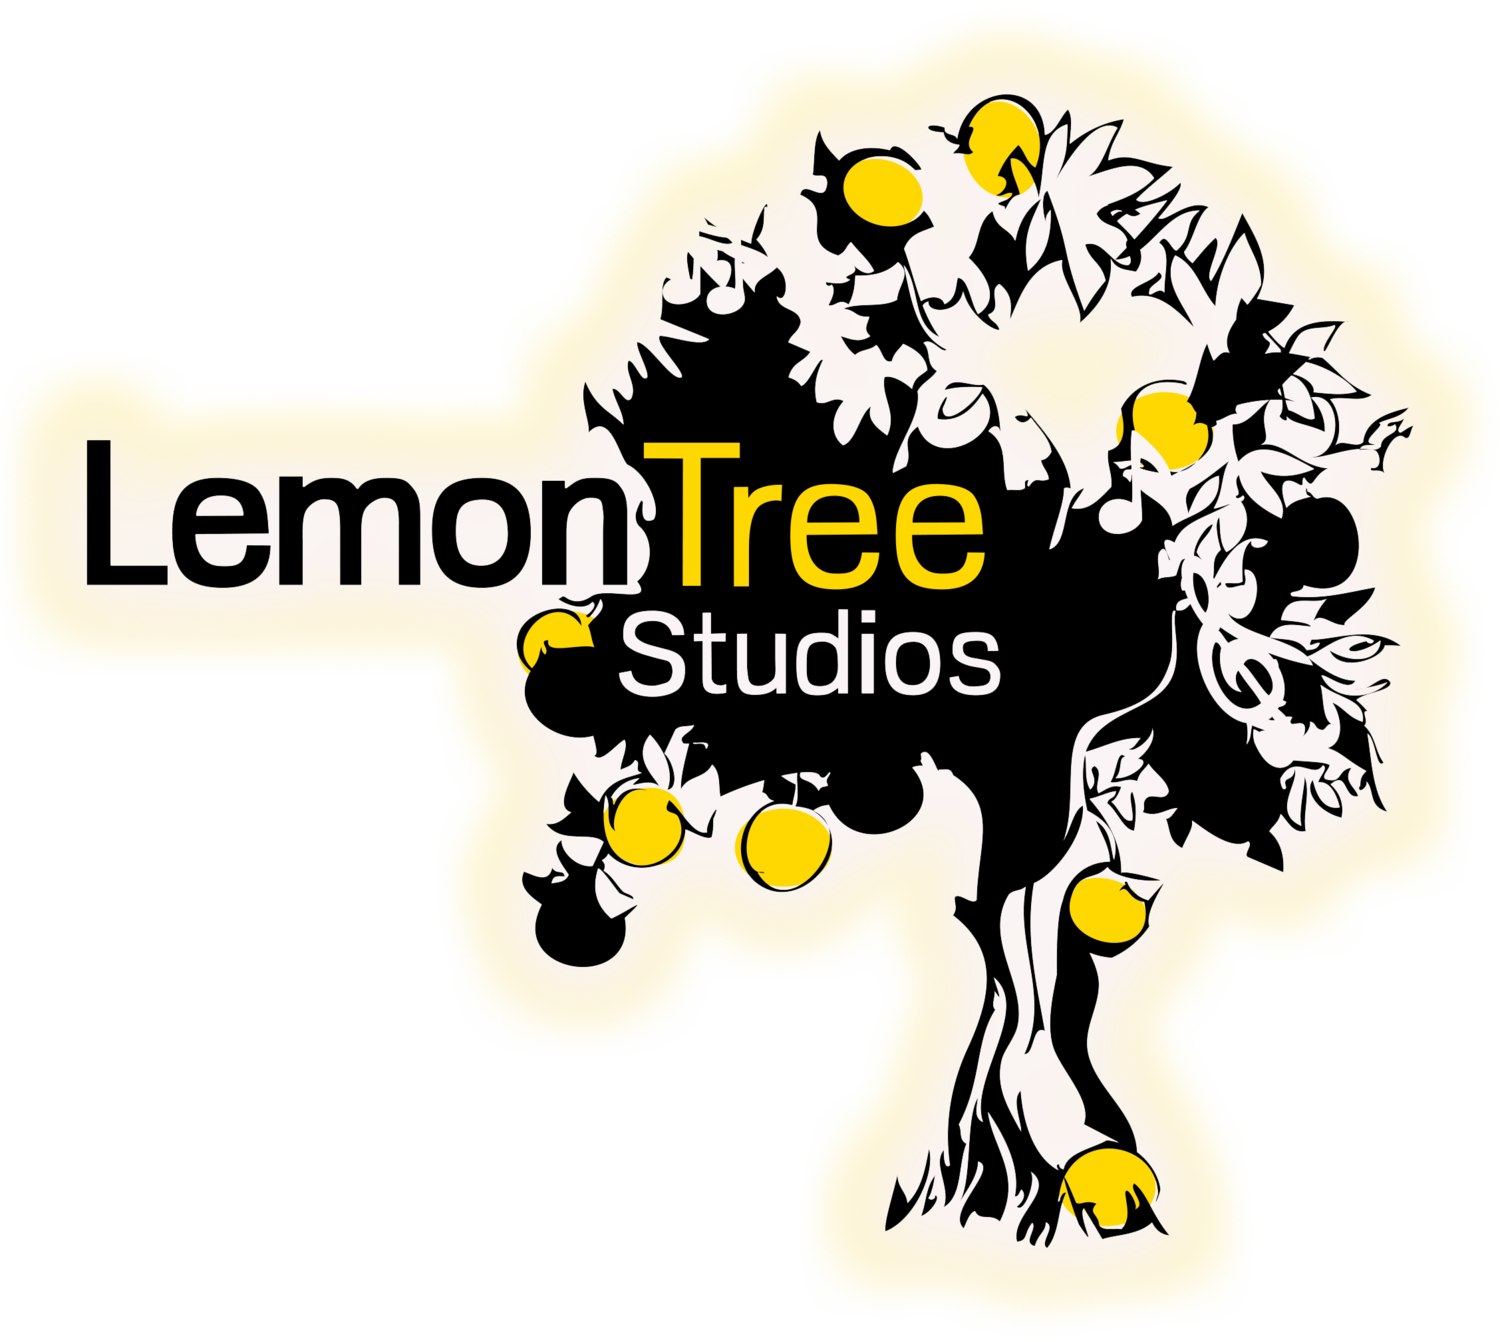 LemonTree Studios